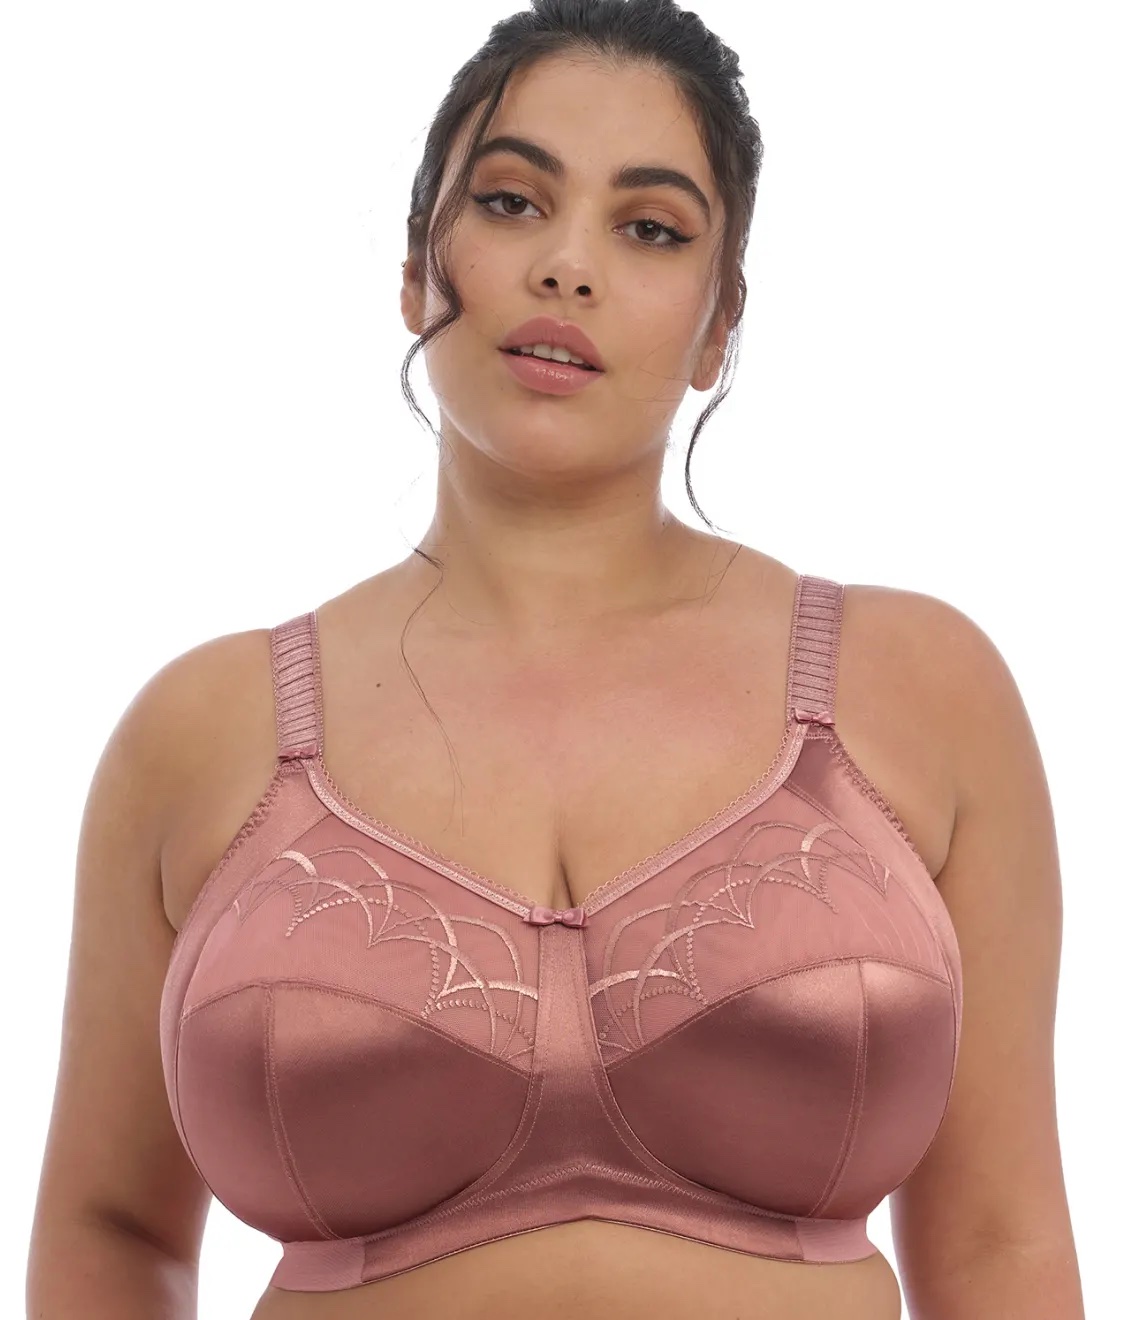 Best of Huge tits in bras